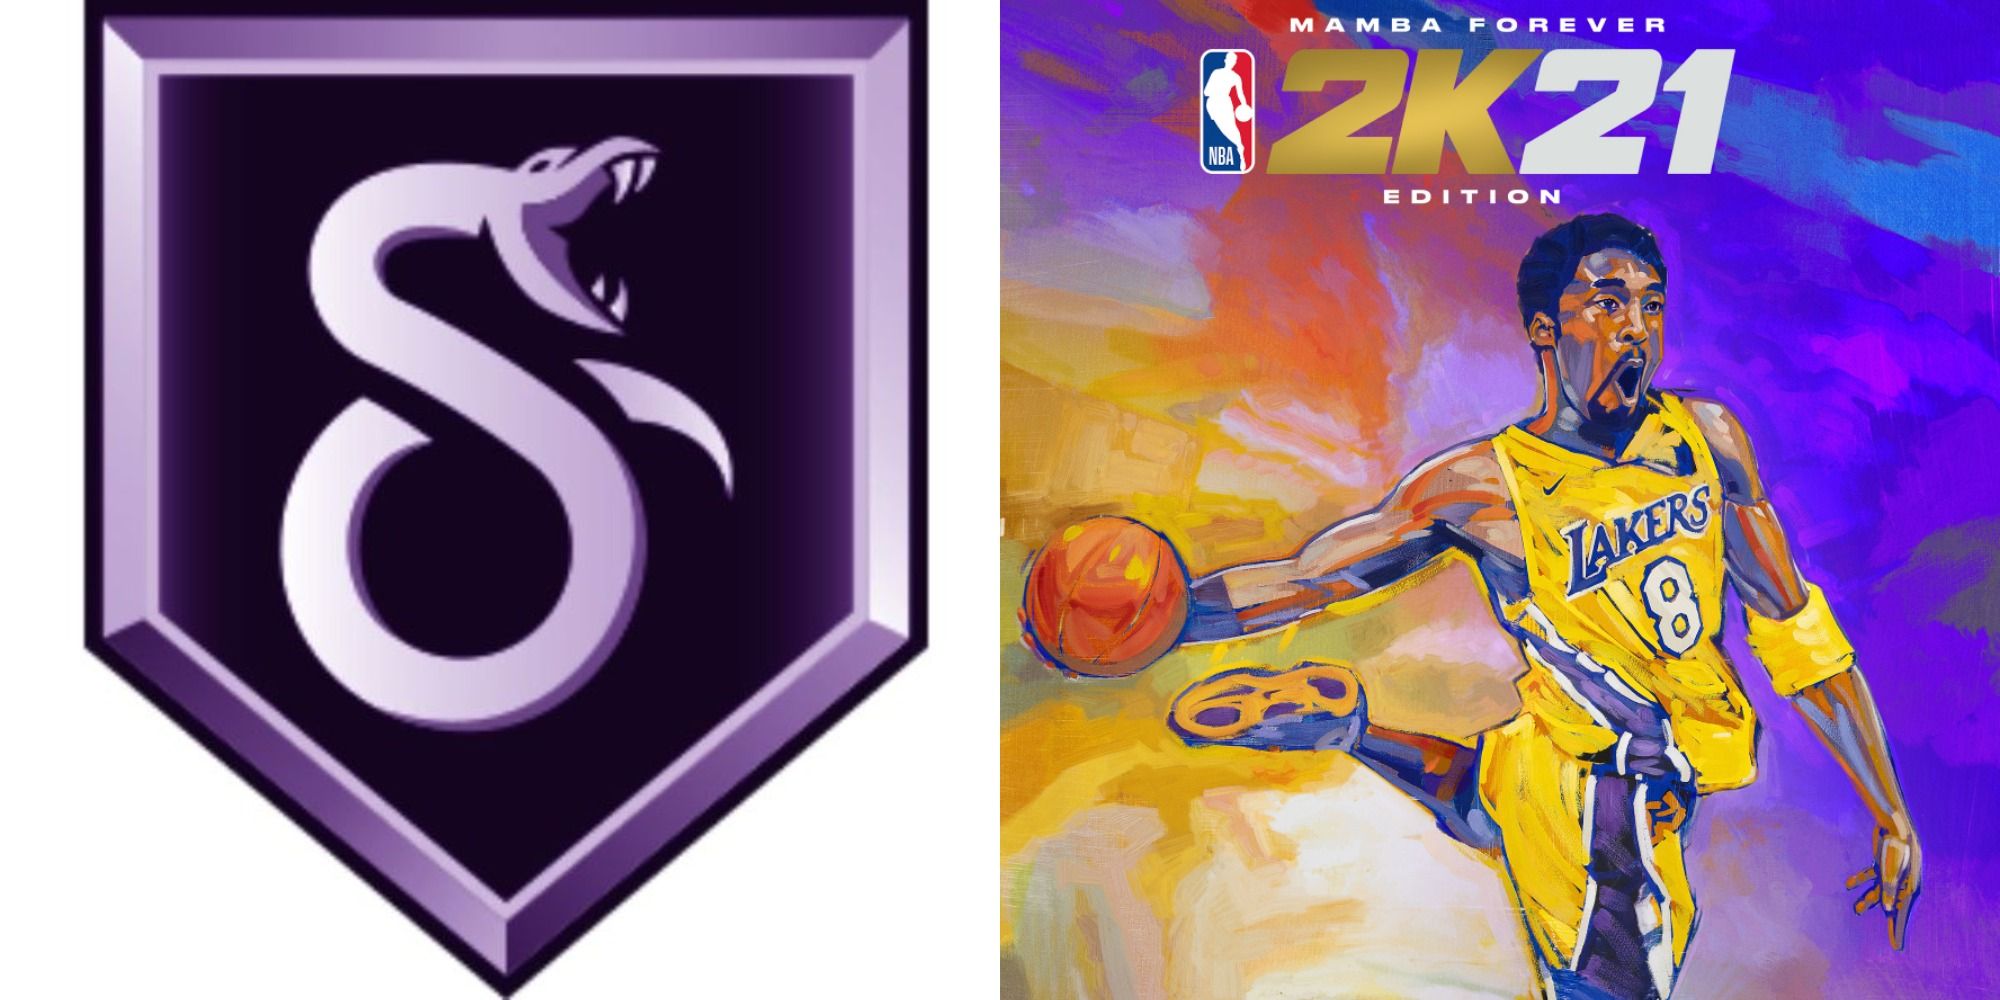 Split image of the slippery finisher badge and the Kobe Bryant NBA 2K21 cover